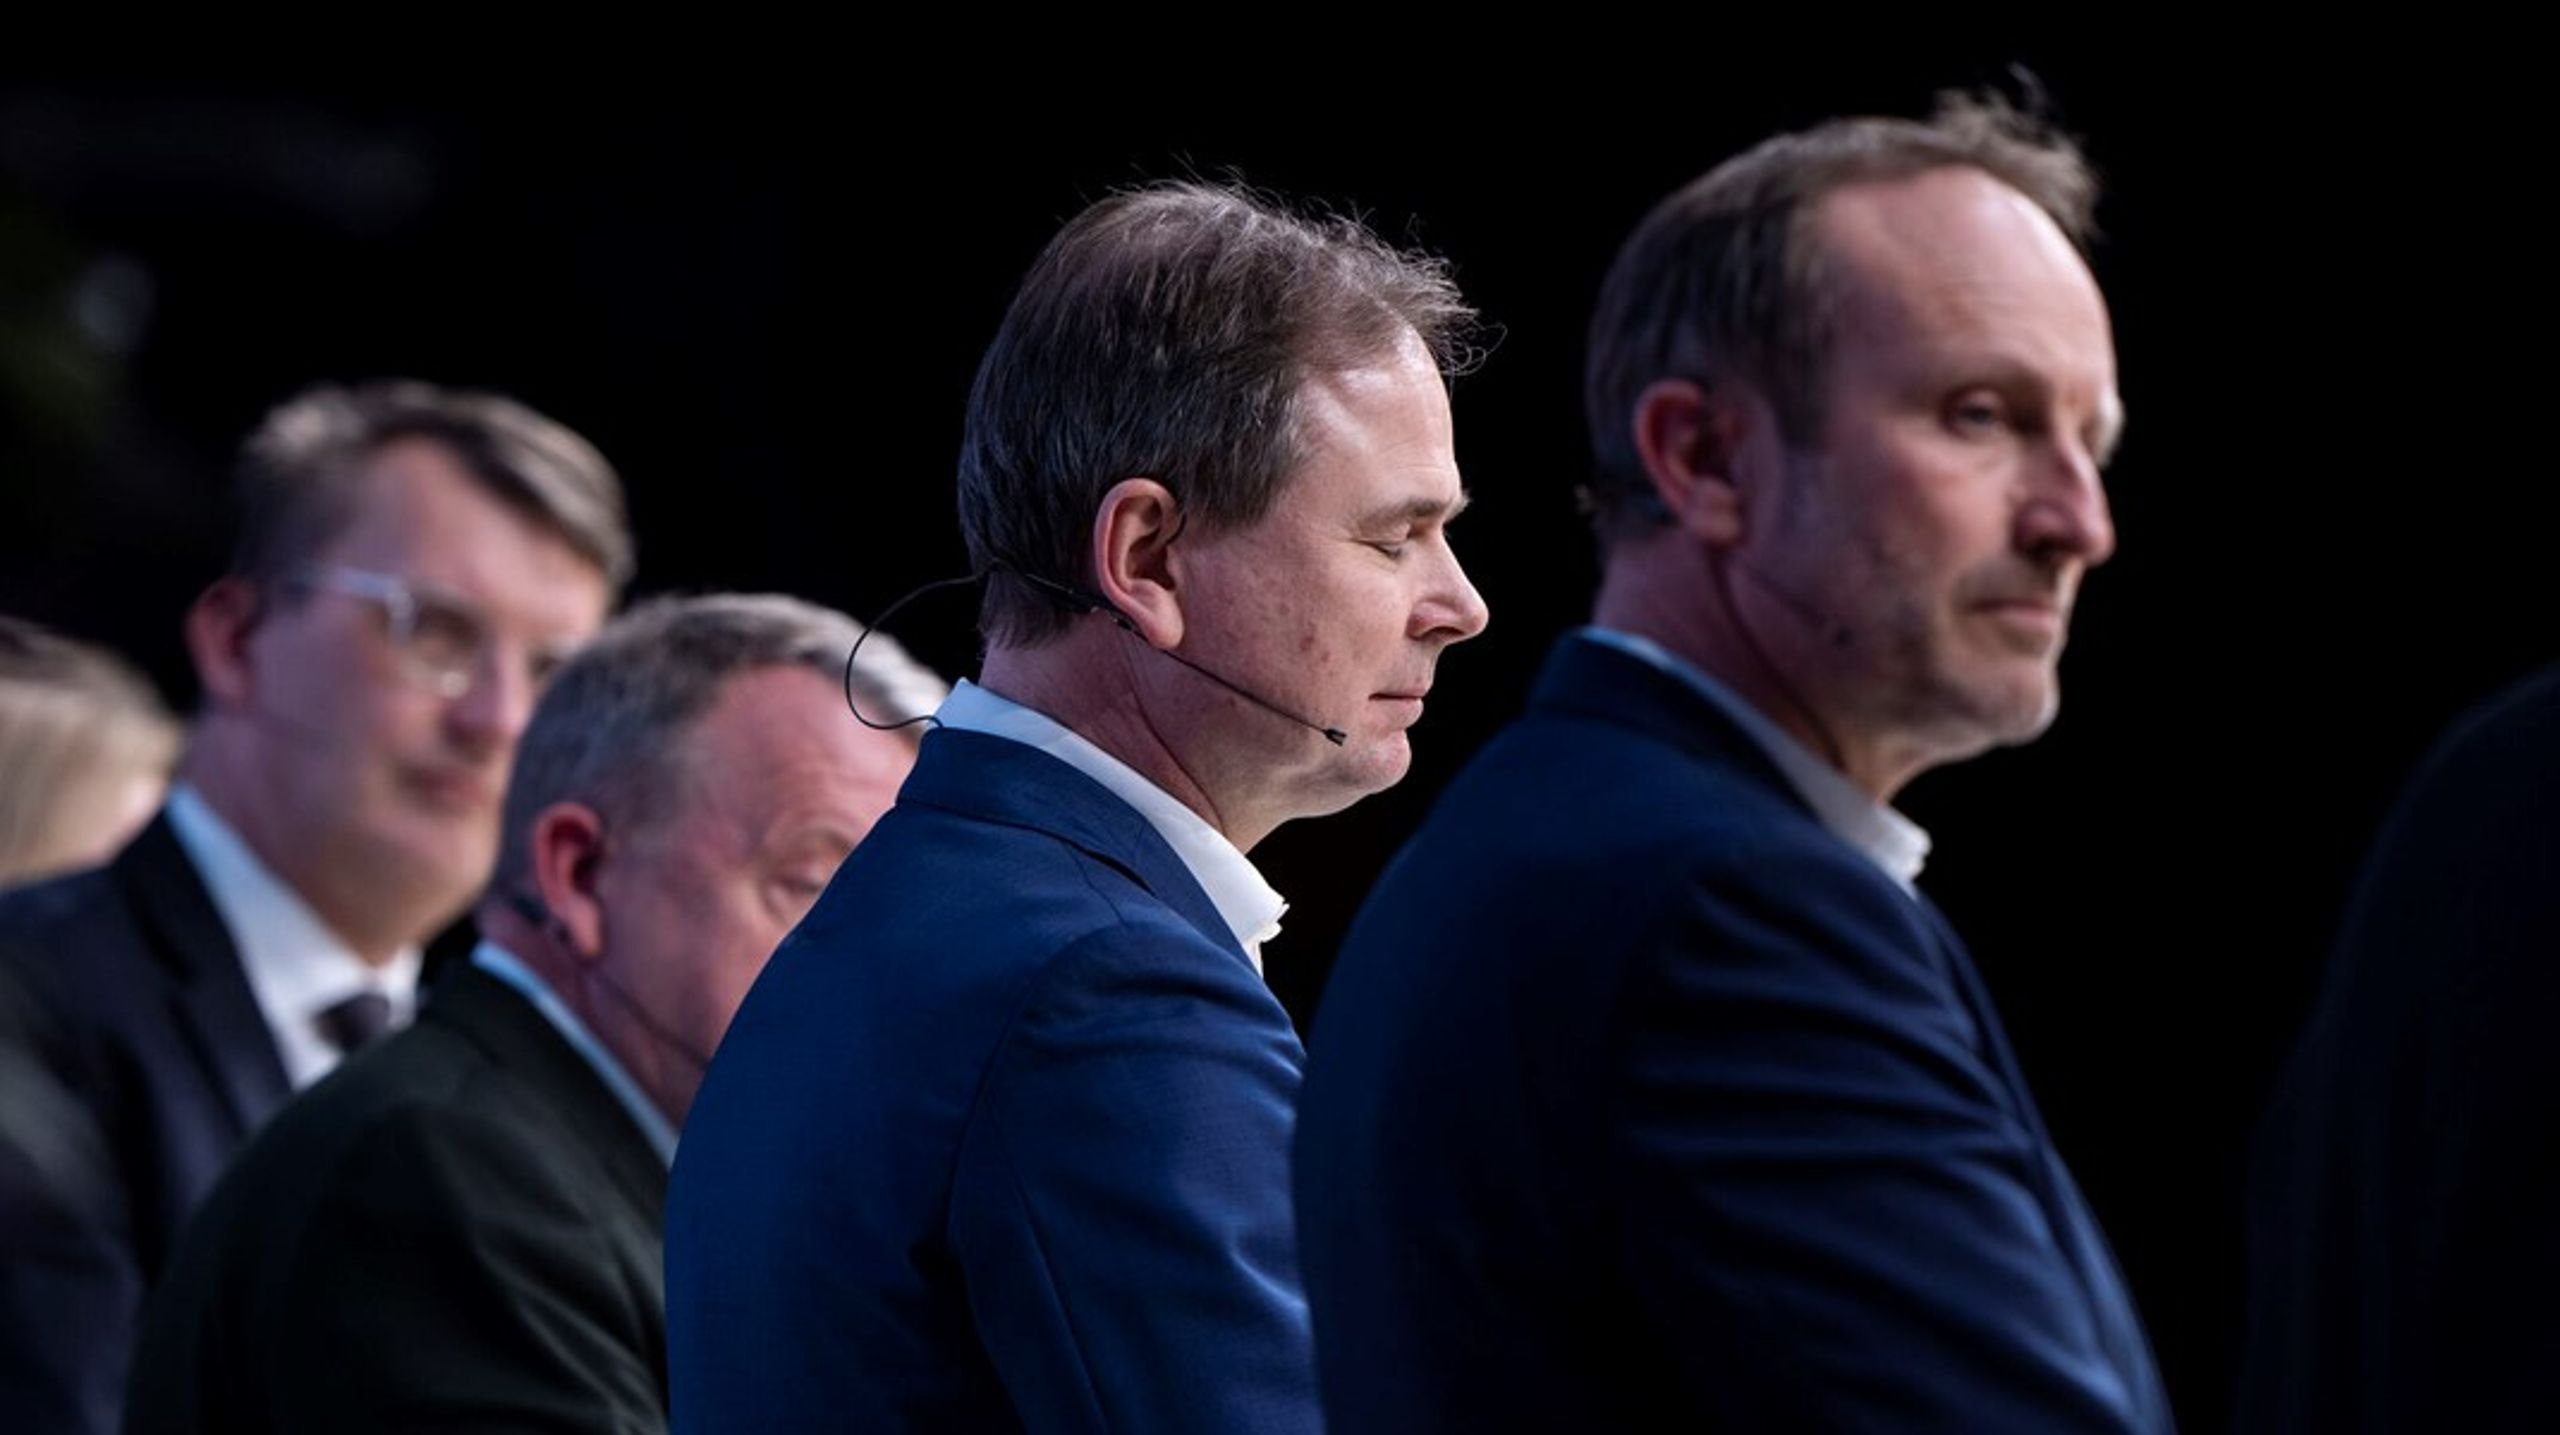 Finansminister Nicolai Wammen forventede fortsat stor samarbejdsvilje om regeringens reformplaner fra oppositionen, da han torsdag deltog i en partilederdebat ved KL's kommunalpolitiske topmøde i Aalborg.